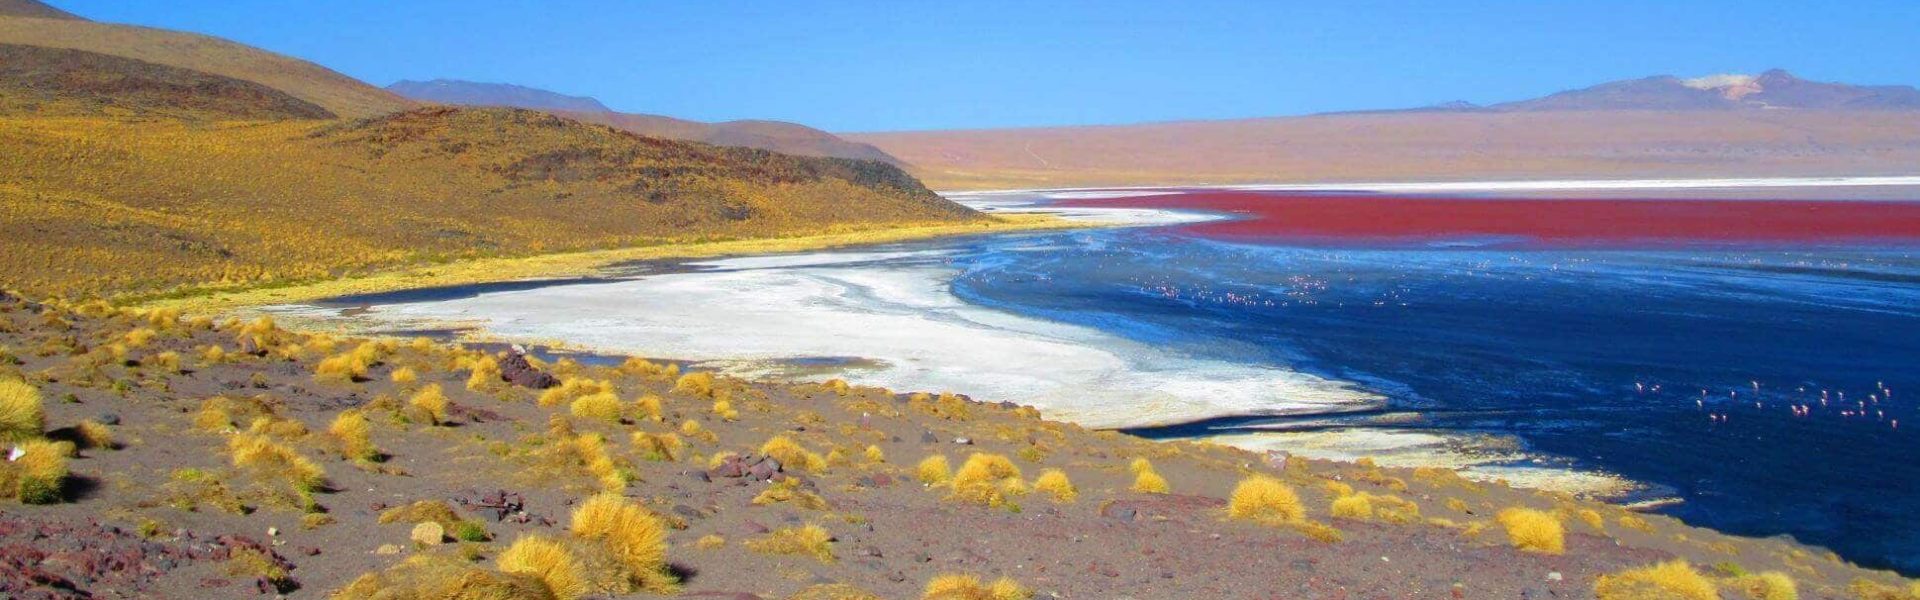 Paleta de colores en el paisaje de Bolivia